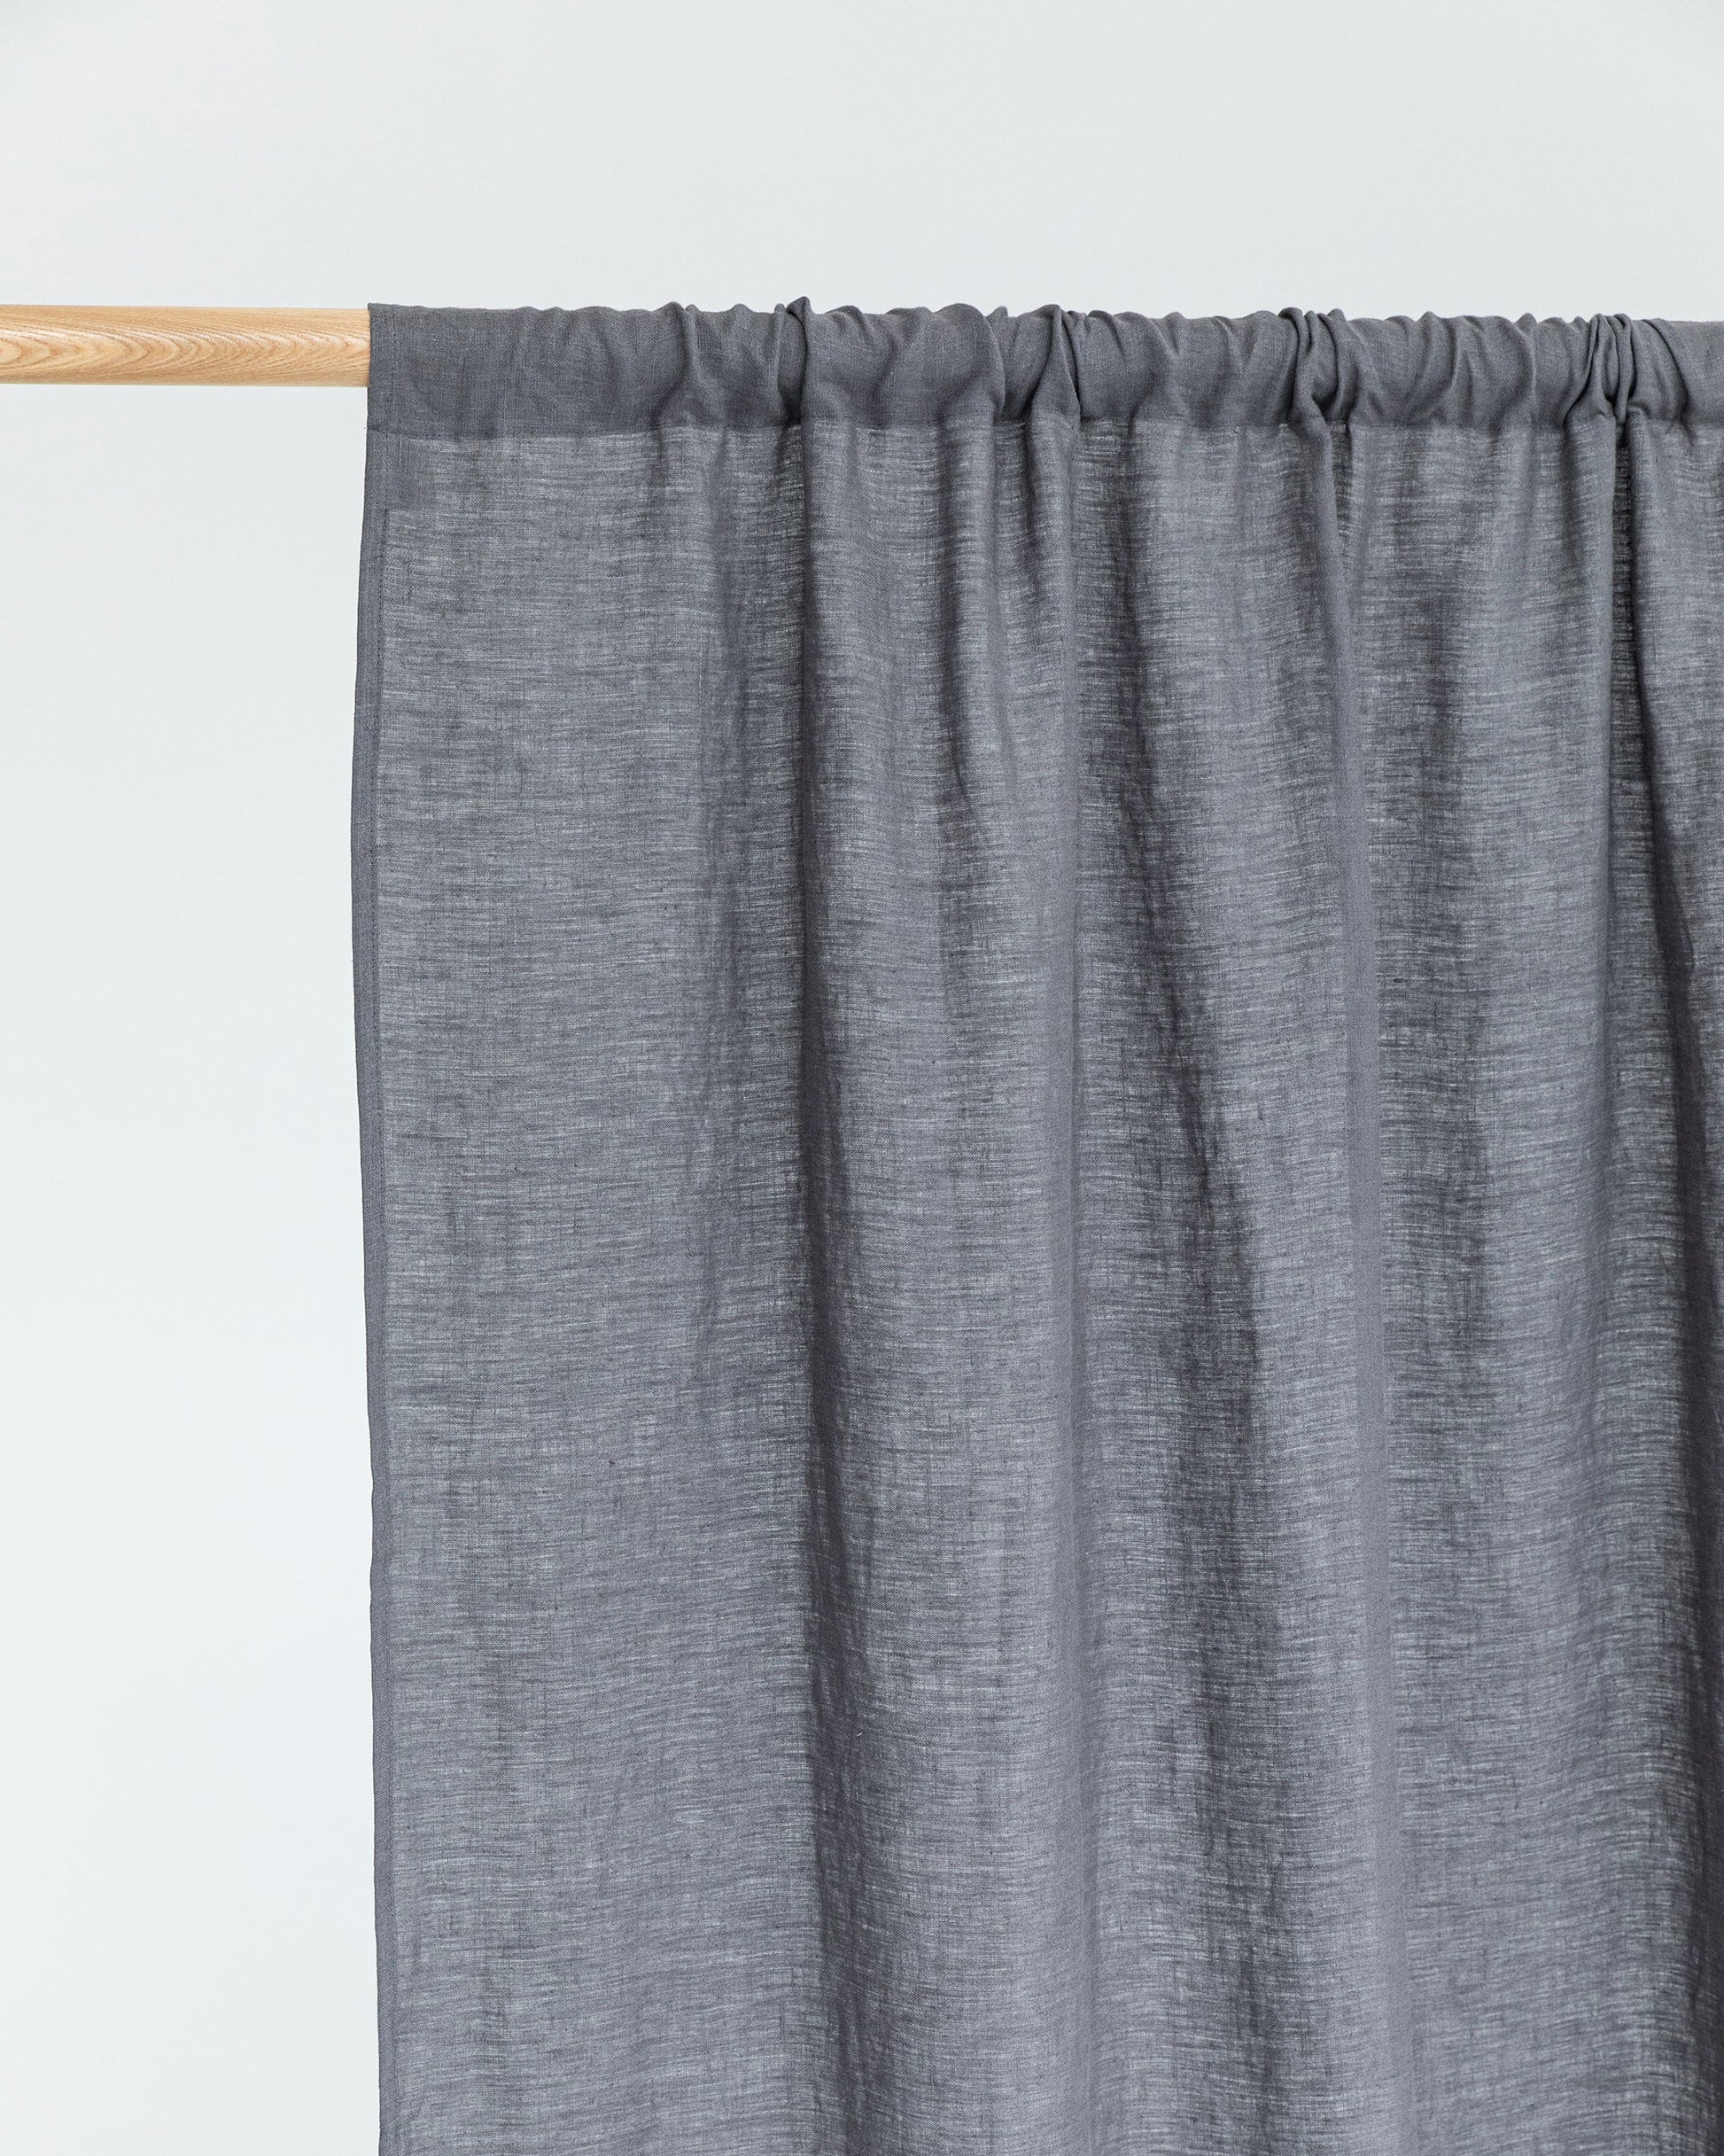 Rod pocket linen curtain panel (1 pcs) in Charcoal gray - MagicLinen